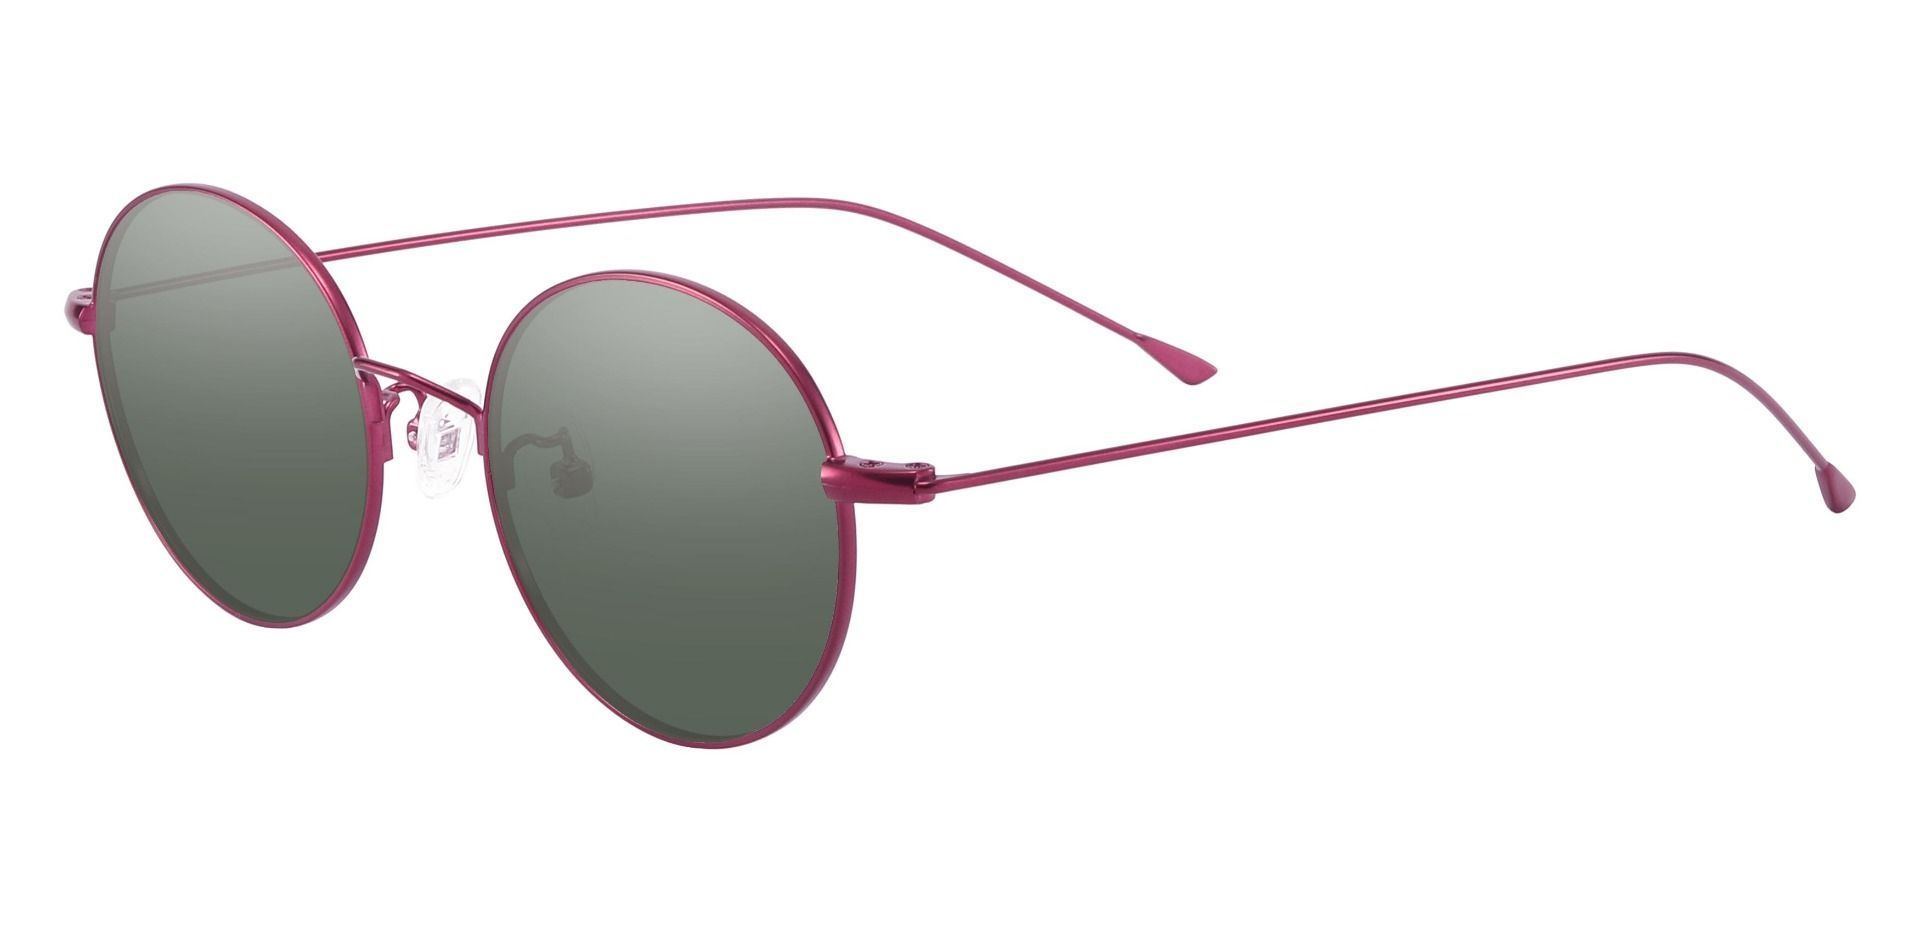 Arden Round Progressive Sunglasses - Purple Frame With Green Lenses